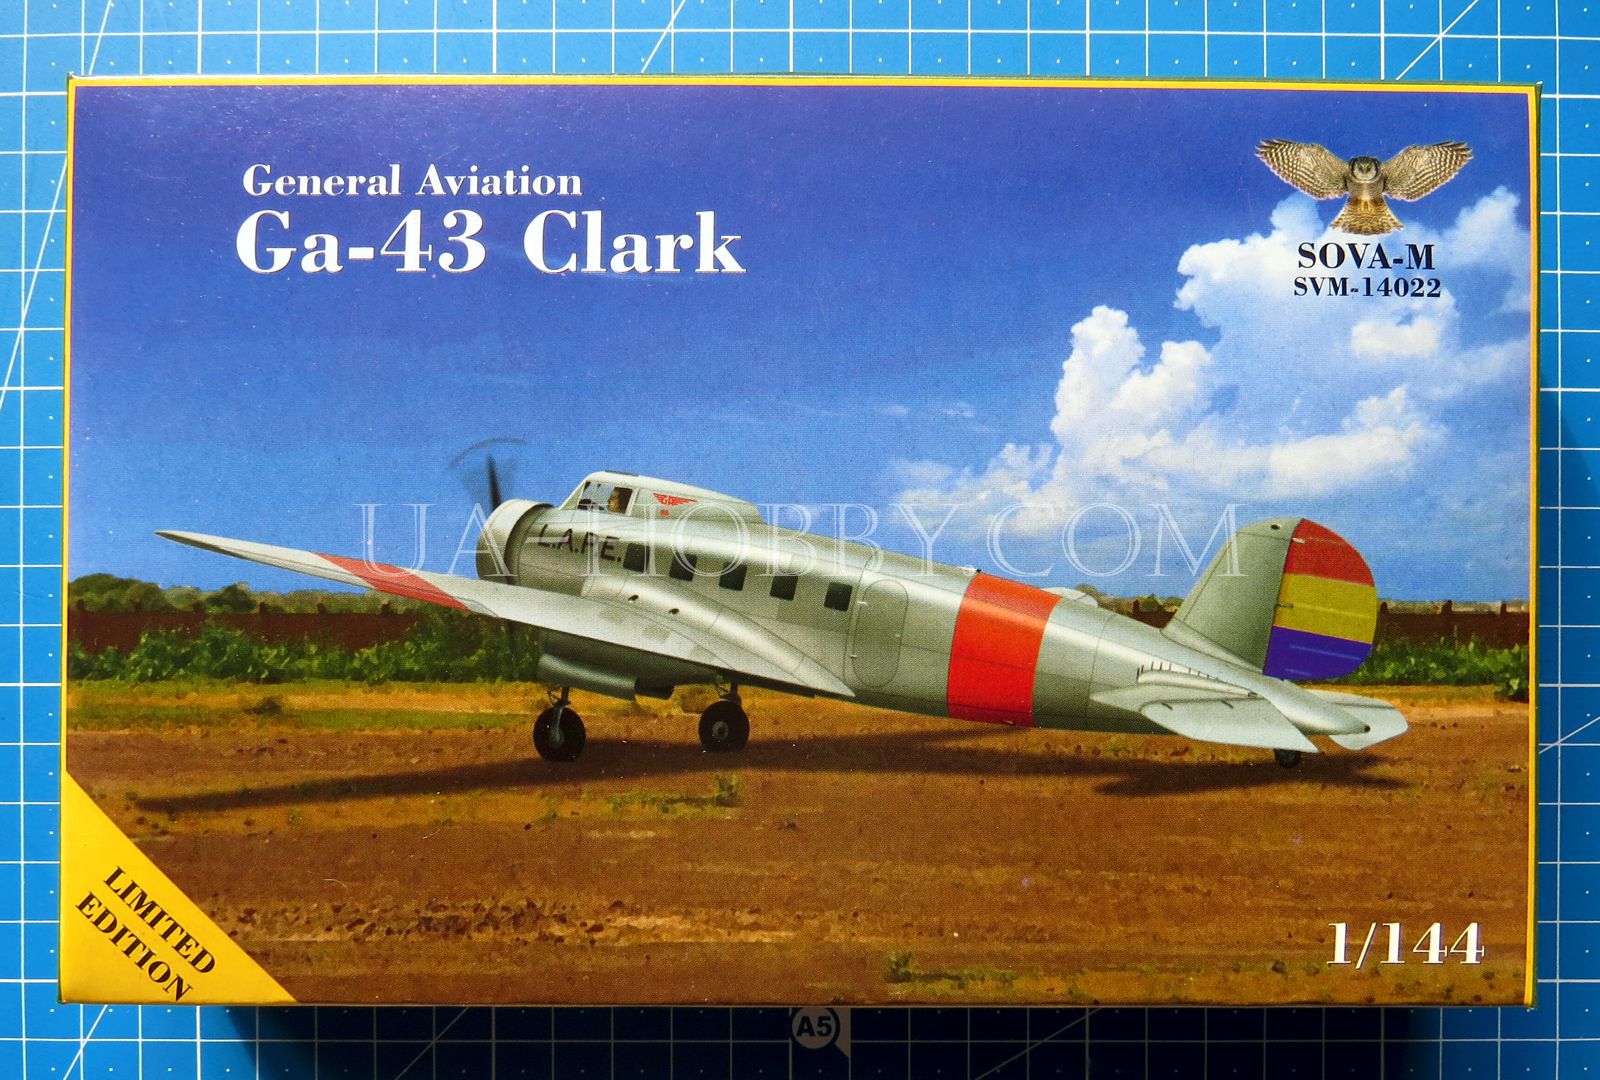 1/144 General Aviation Ga-43 Clark. SOVA-M SVM-14022